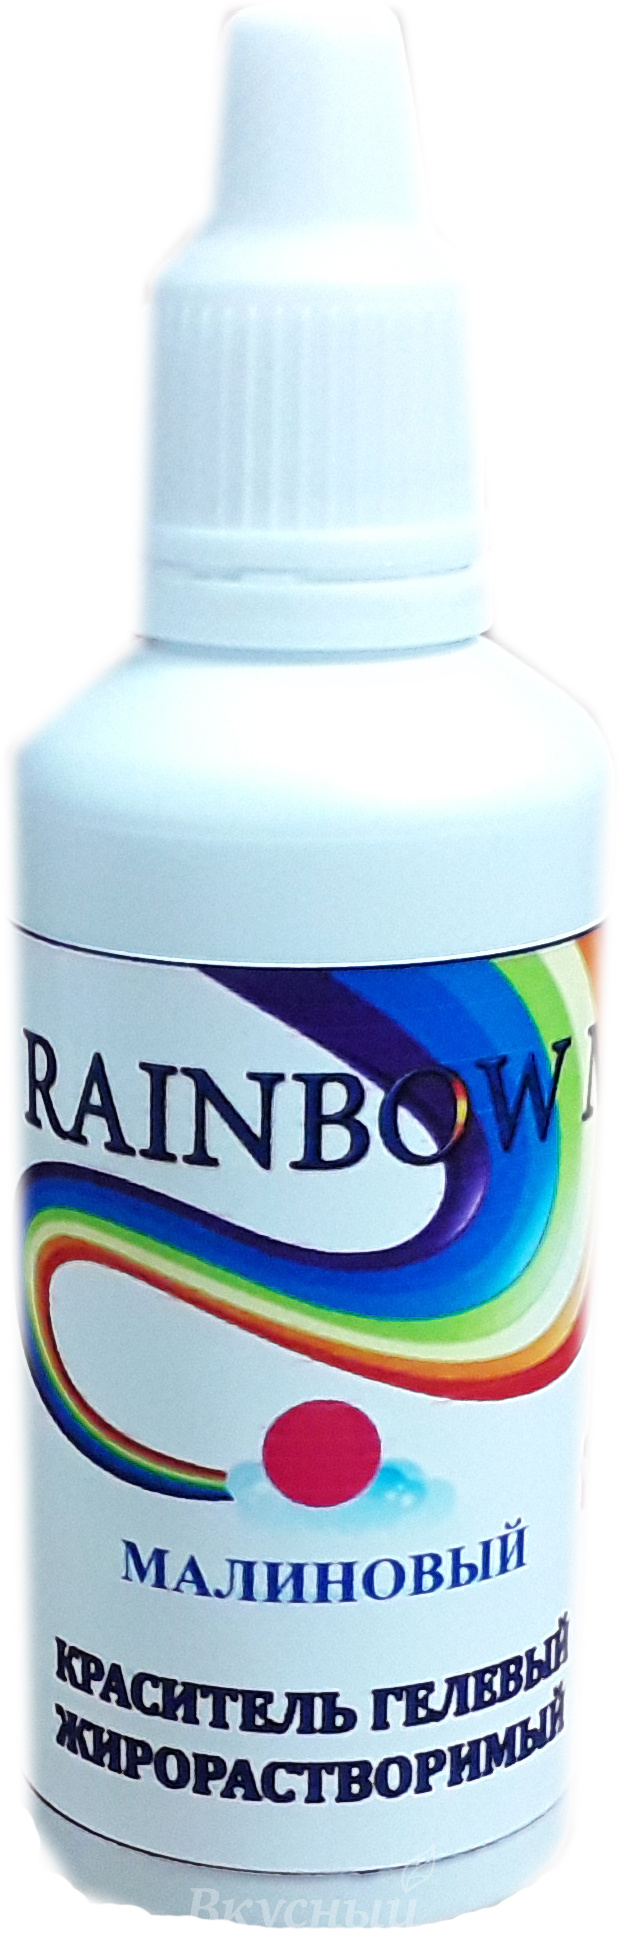 Краска гелевая жирорастворимая Малиновая Rainbow Man, 40 гр.